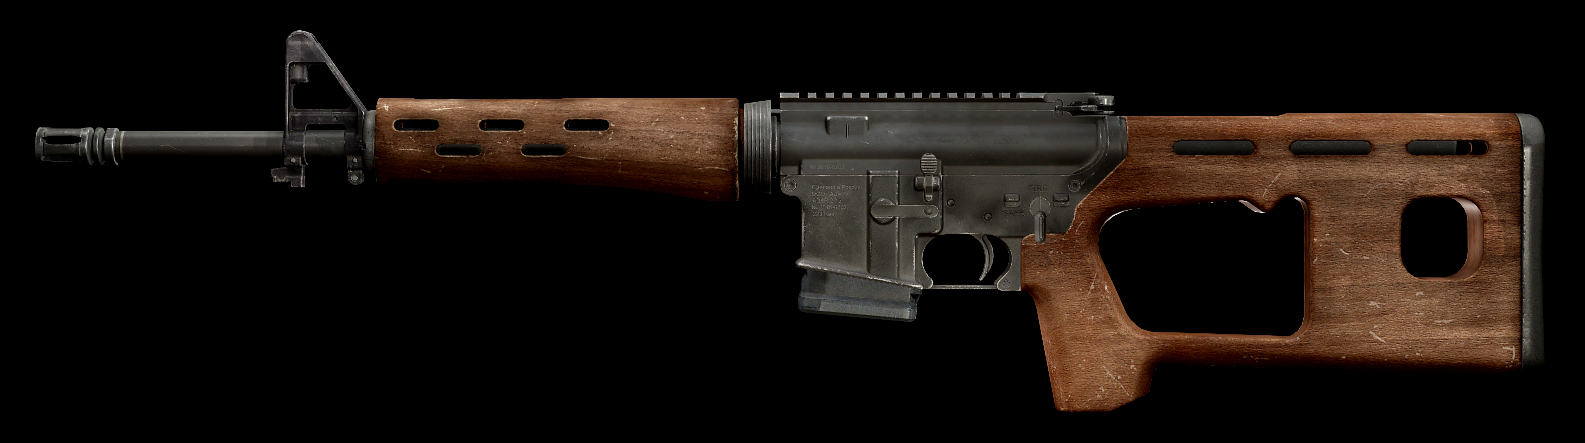 ADAR 2-15 5.56x45 carbine - The Official Escape from Tarkov Wiki